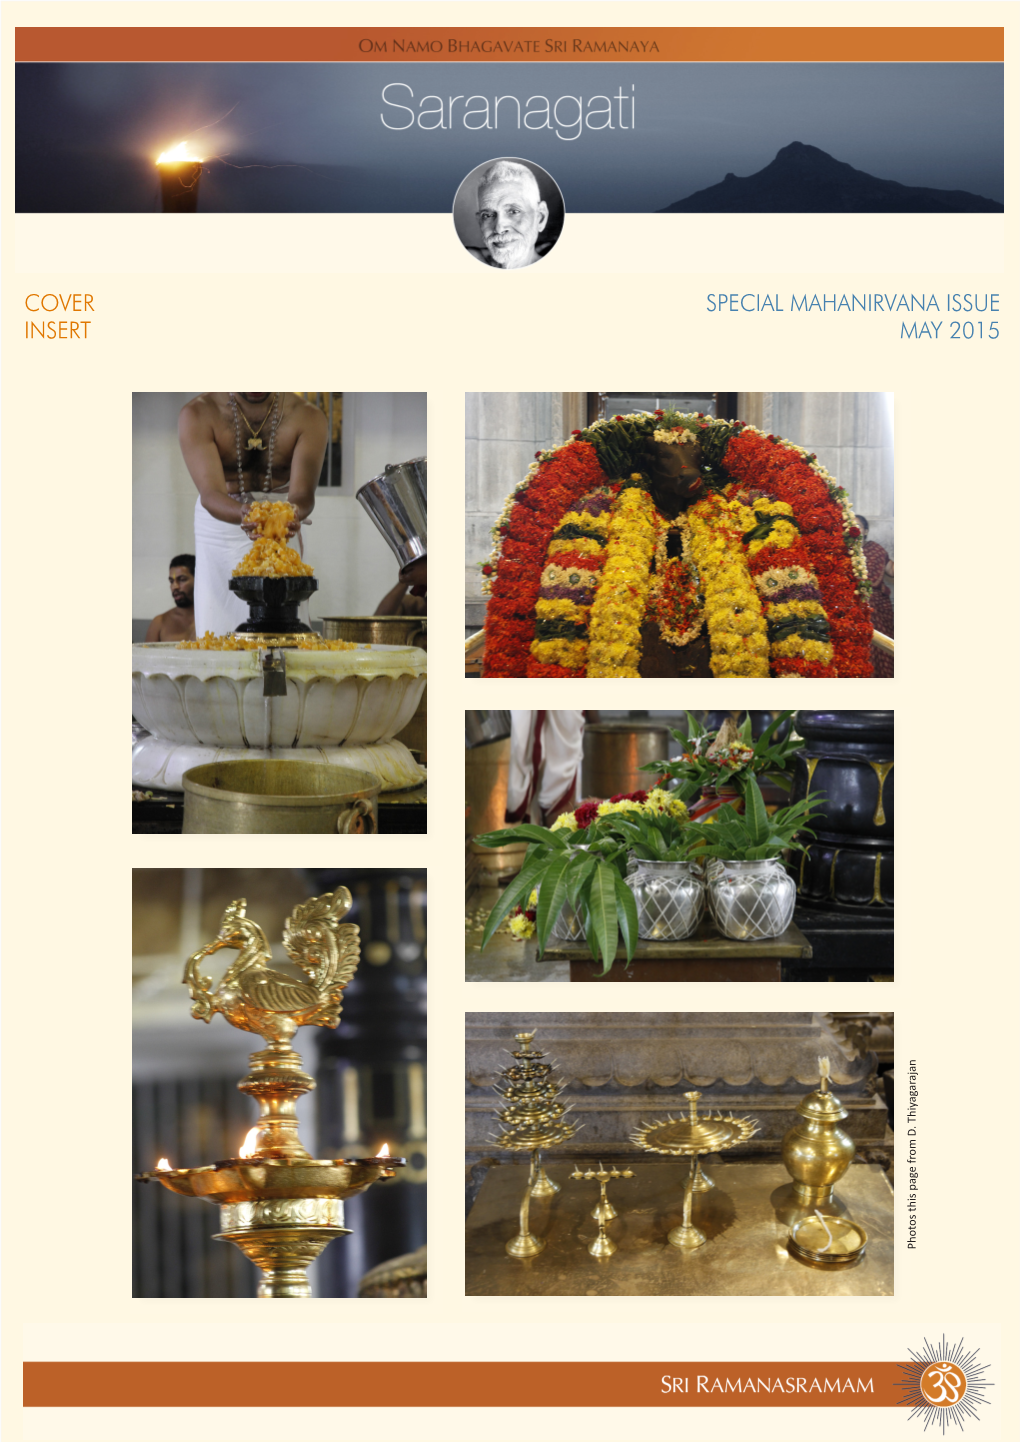 Cover Insert Special Mahanirvana Issue May 2015